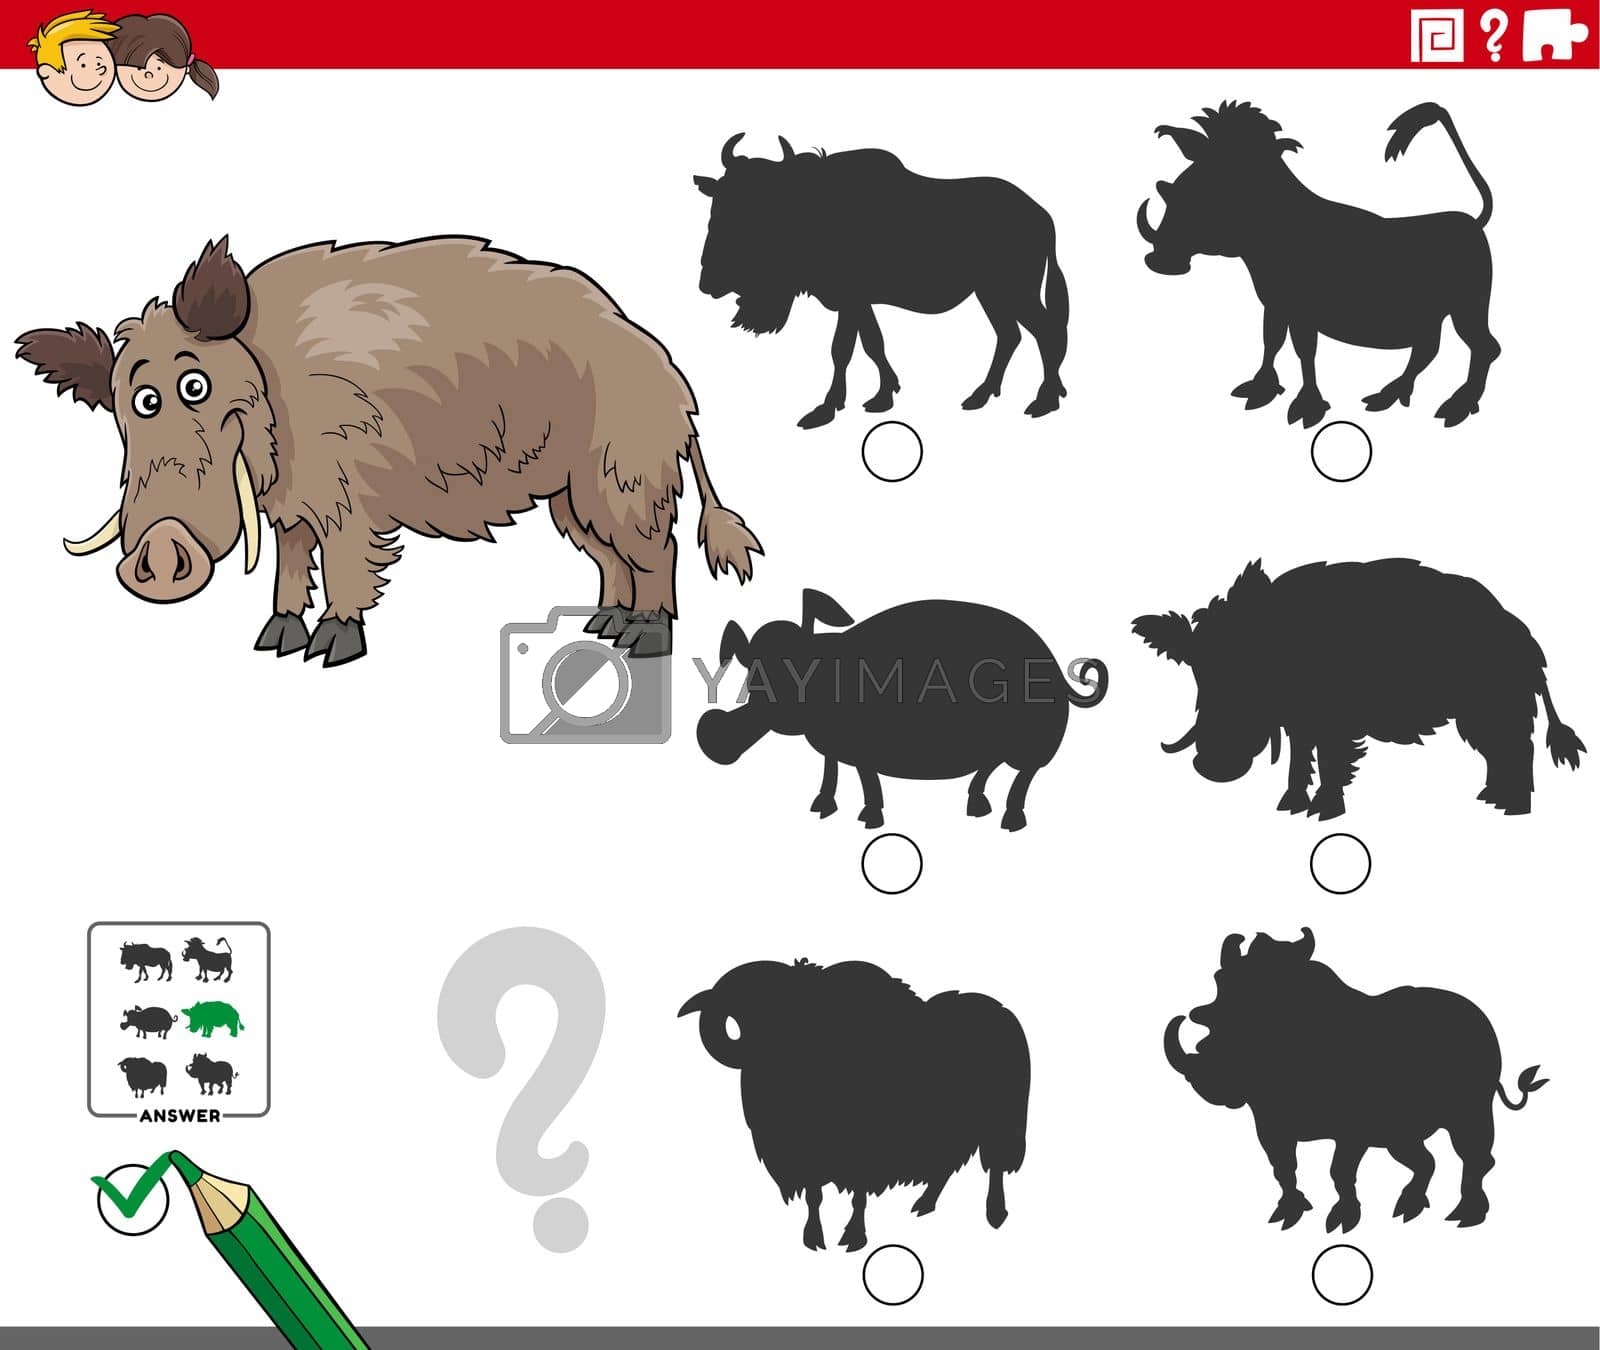 Royalty free image of shadow game with cartoon wild boar animal character by izakowski